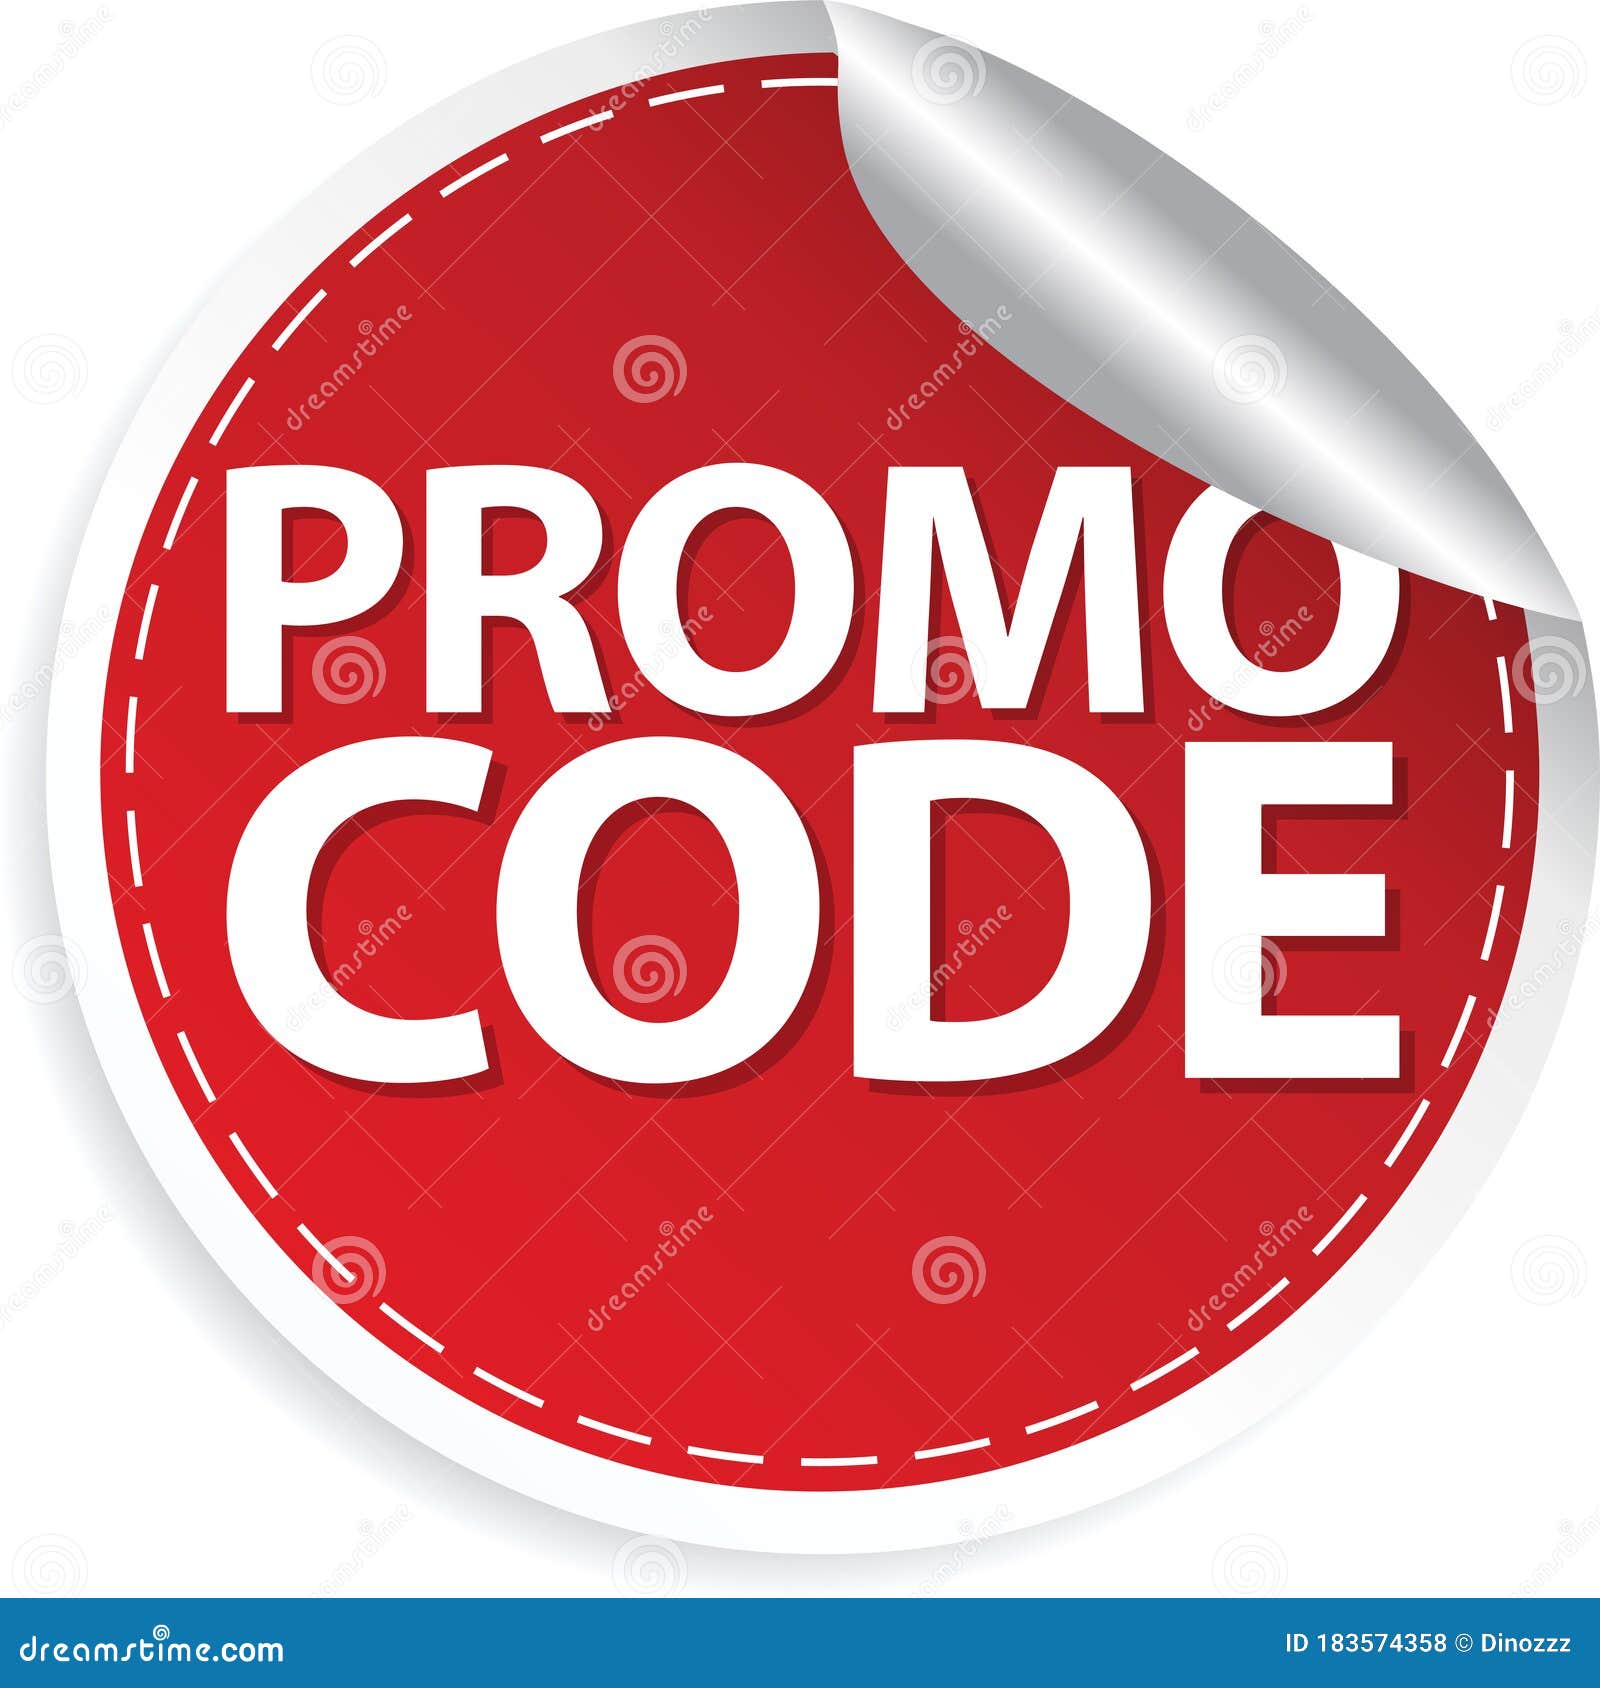 promo code red sticker, 